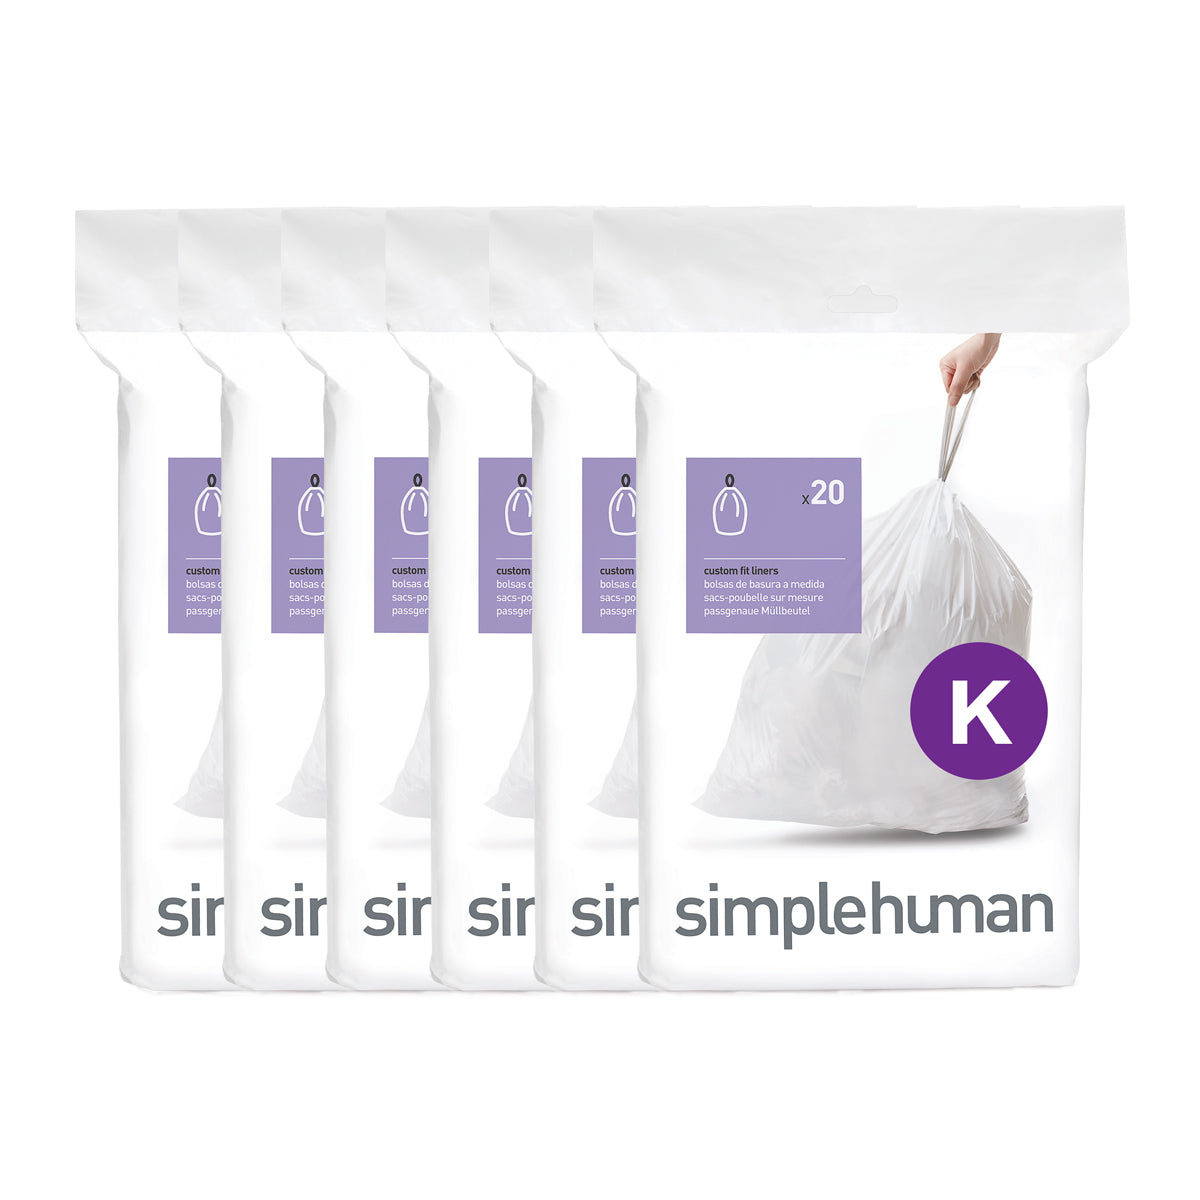 simplehuman code K custom fit liners